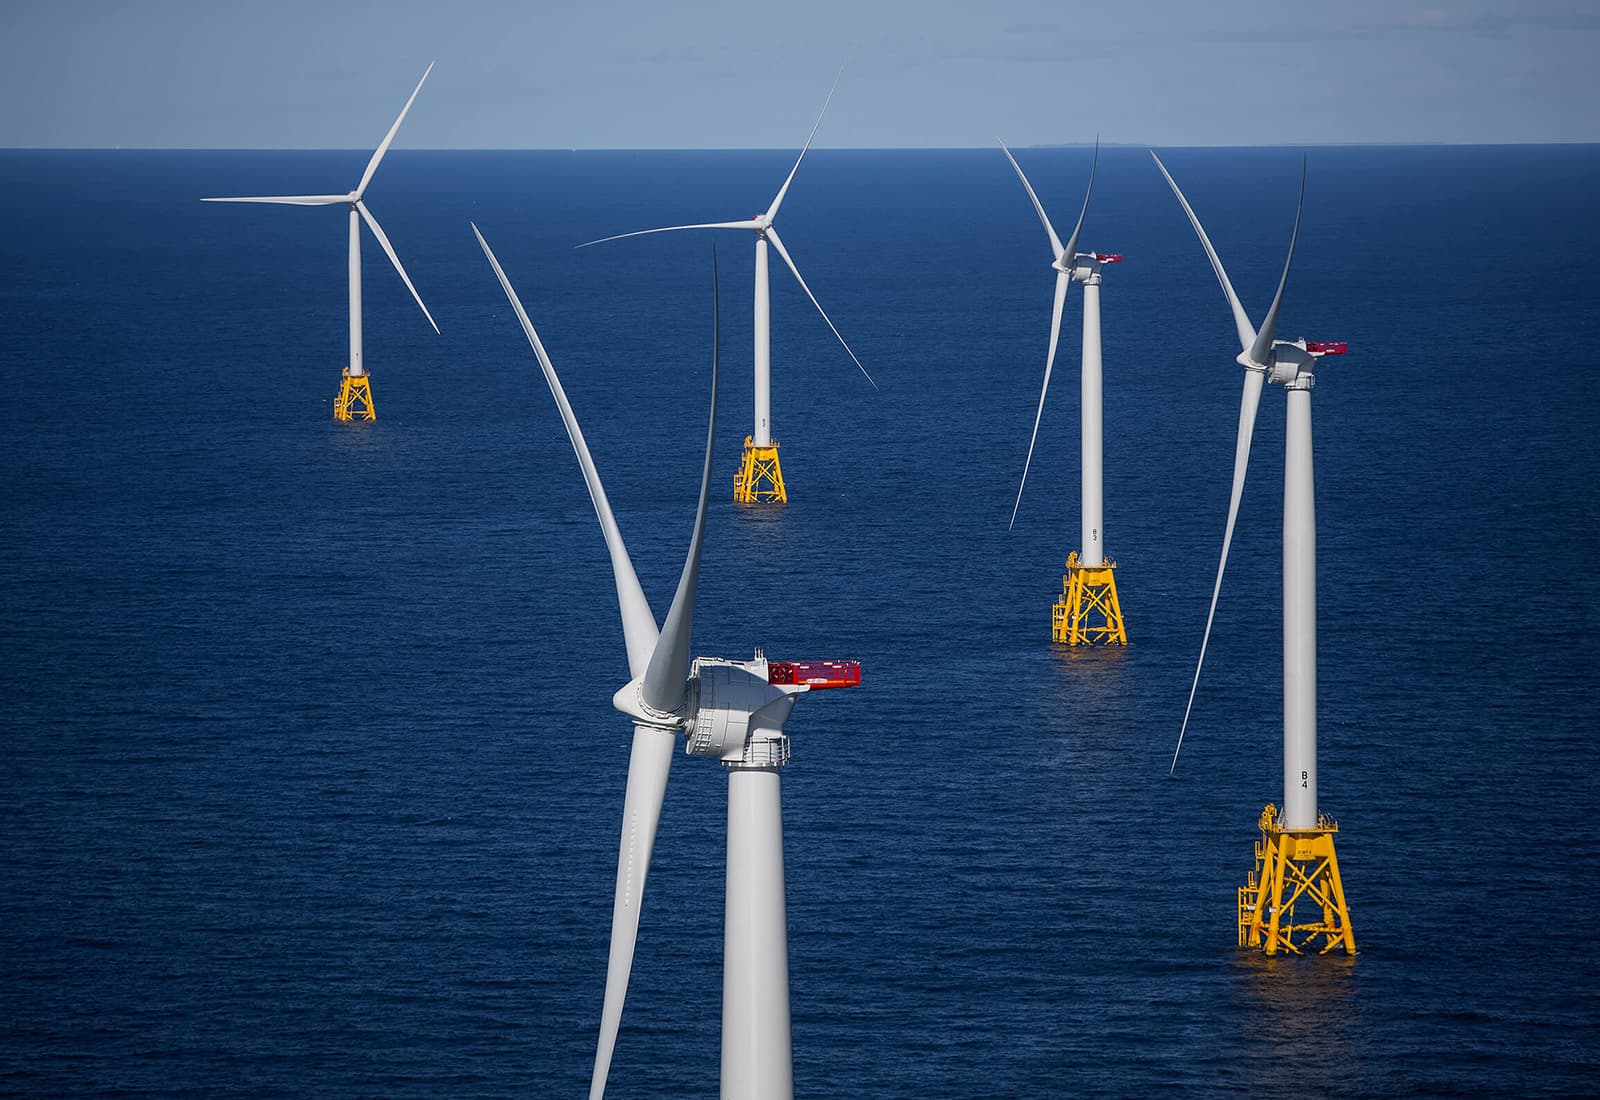 The GE-Alstom Block Island Wind Farm off Block Island, Rhode Island. Photo credit: Eric Thayer and Bloomberg